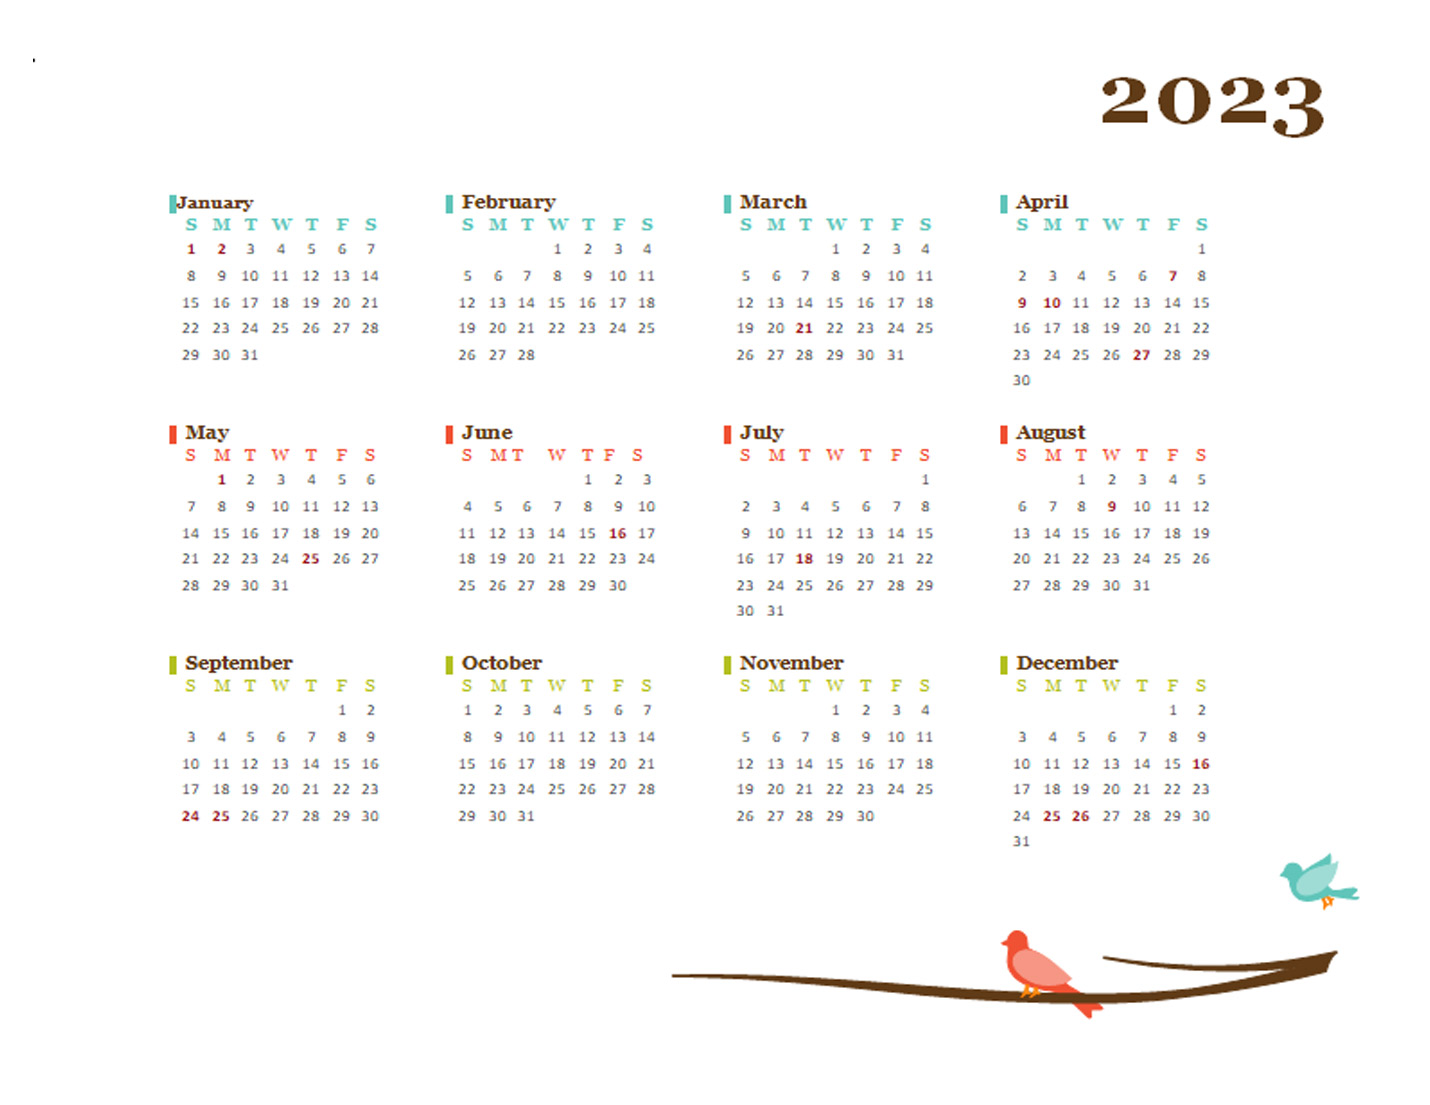 2023-ireland-bank-holidays-2023-calendar-february-2023-calendar